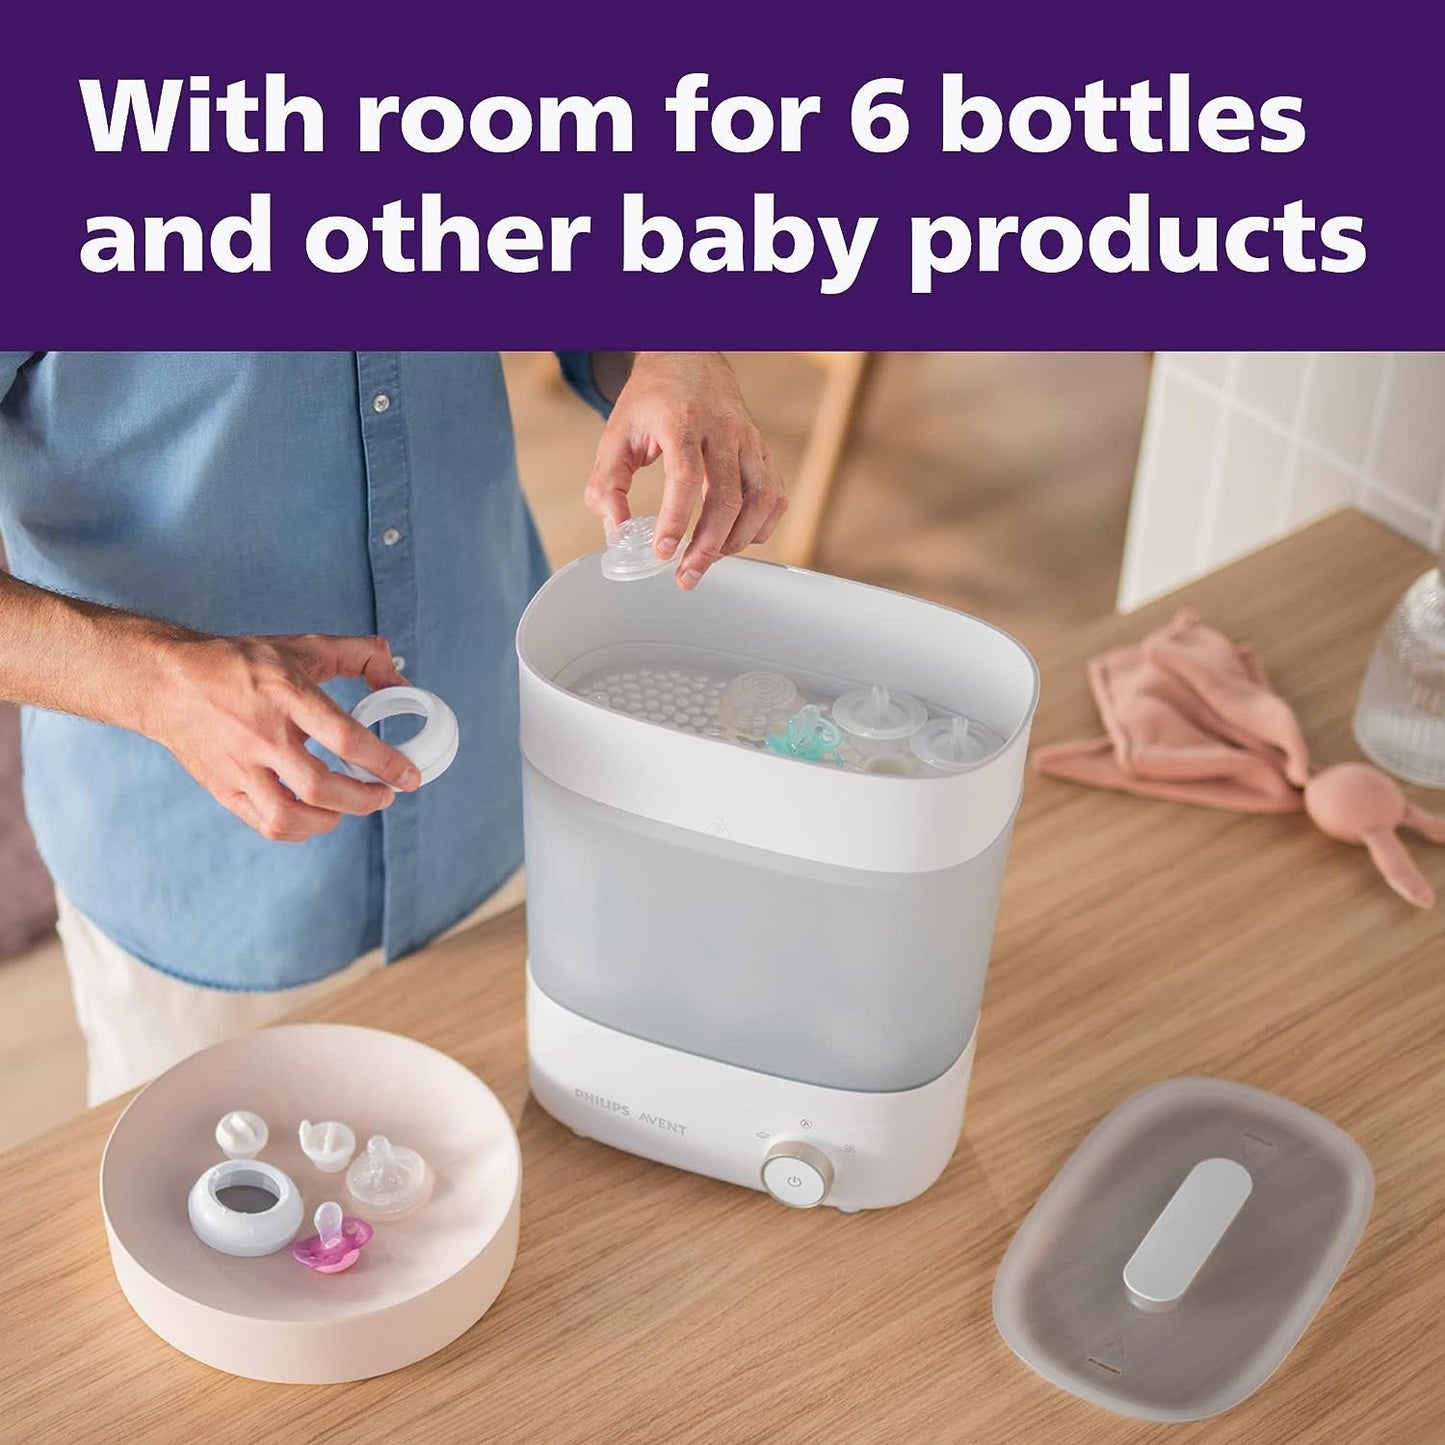 Avent Premium Baby Bottle Sterilizer with Dryer